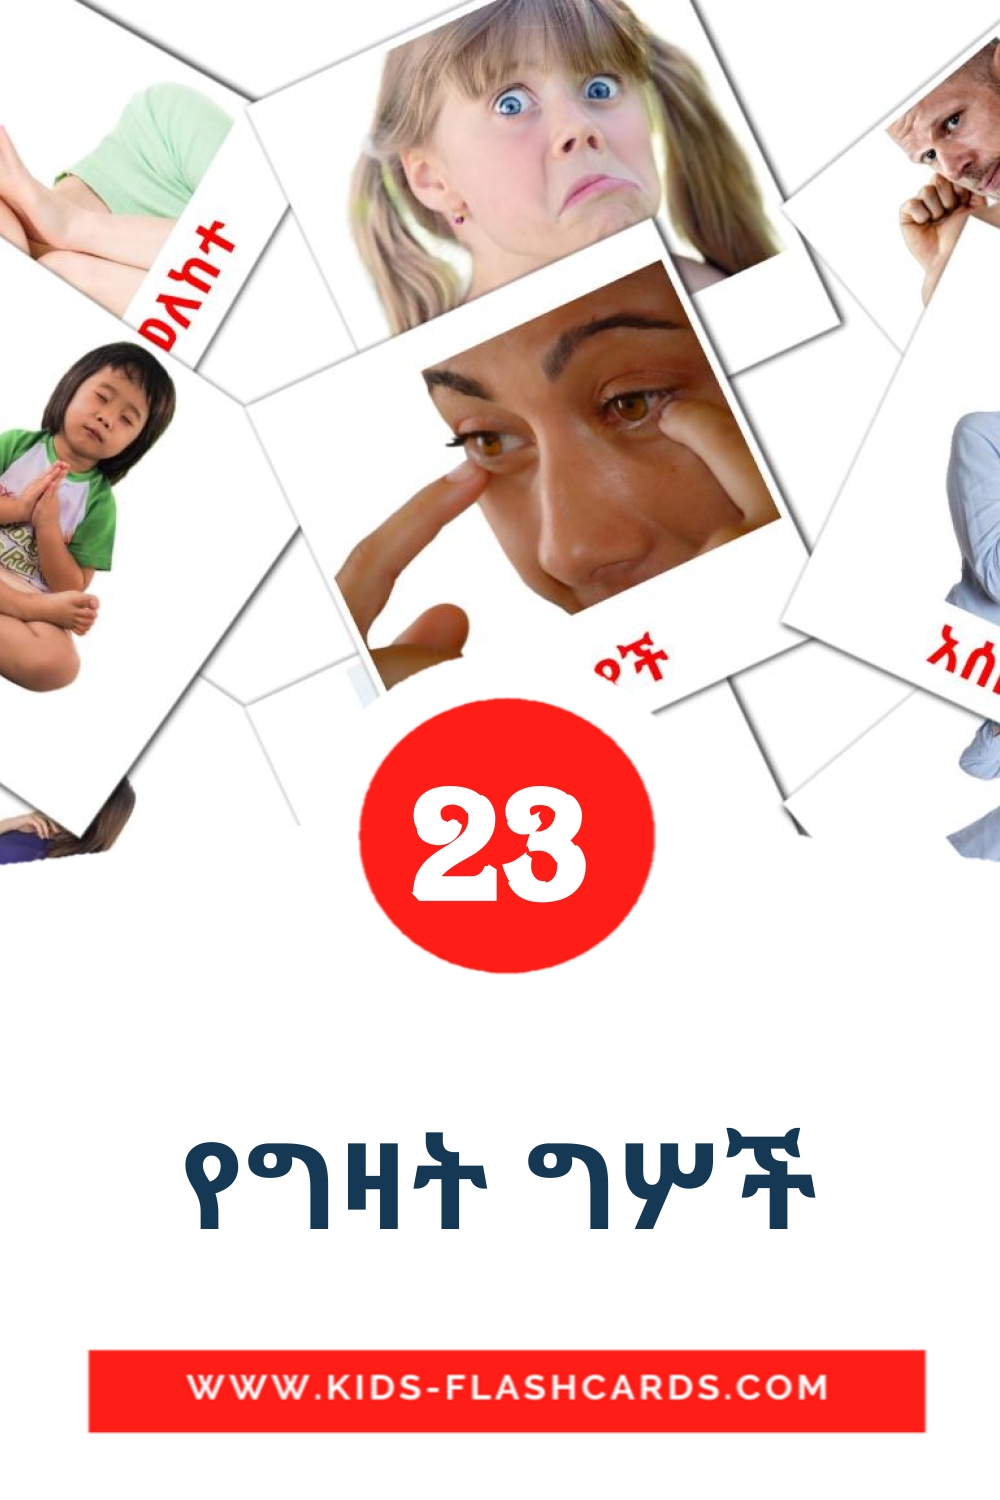 23 carte illustrate di የግዛት ግሦች per la scuola materna in amárica